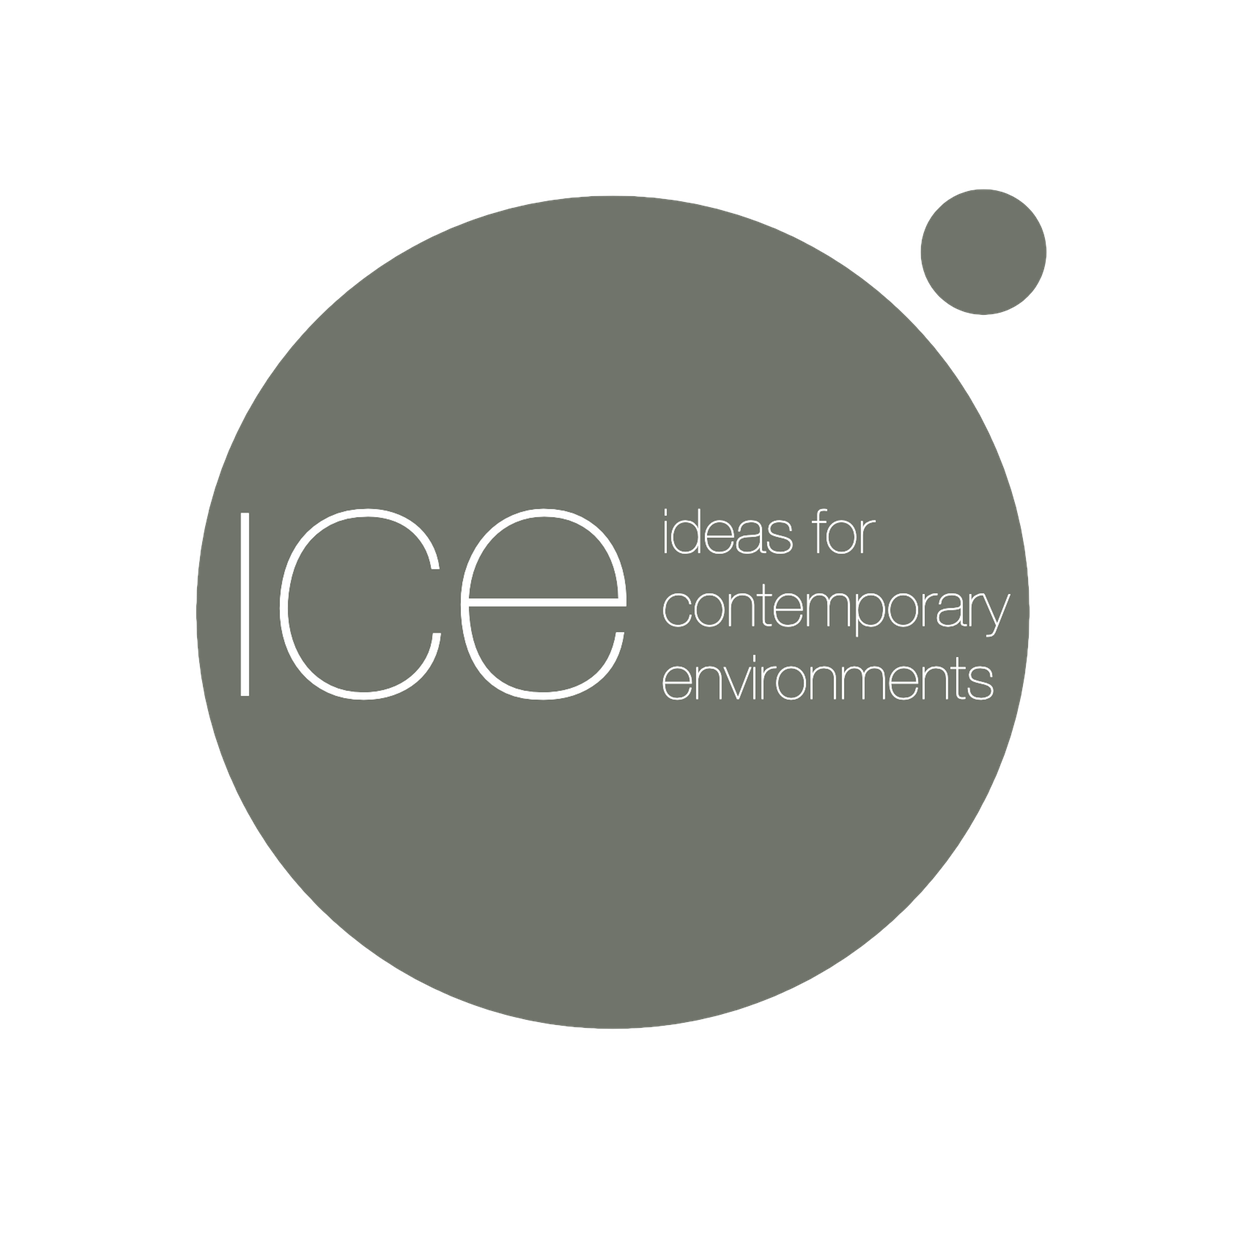 ice - ideas for contemporary environments